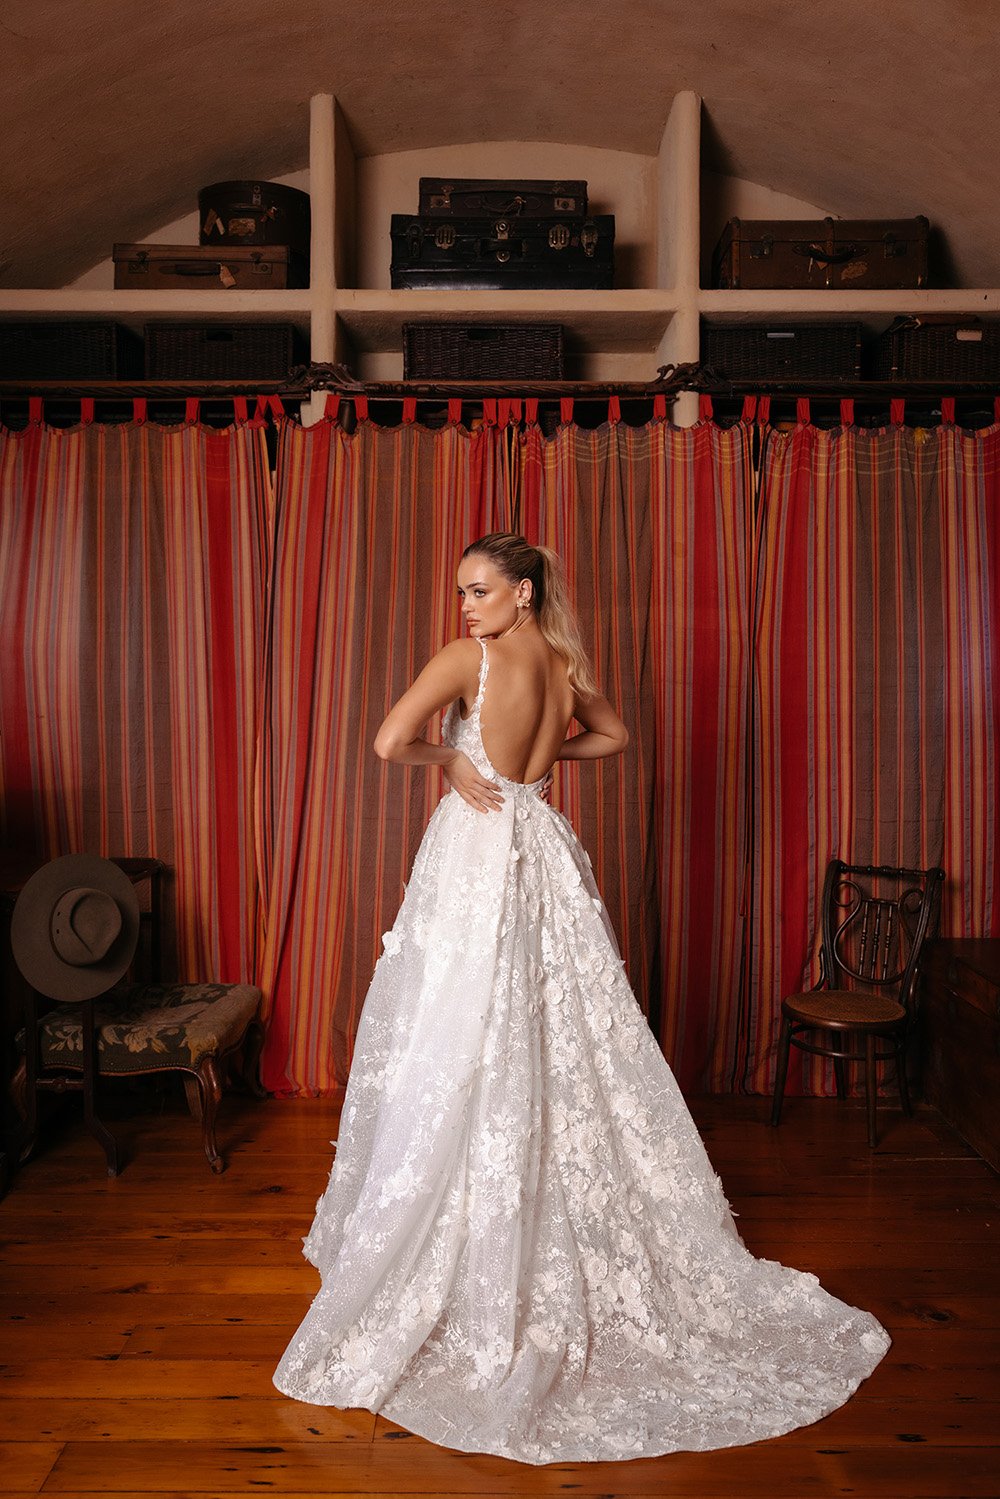 blanc-de-blanc-bridal-boutique-pittsburgh-dress-wedding-gown-casablanca.jpg